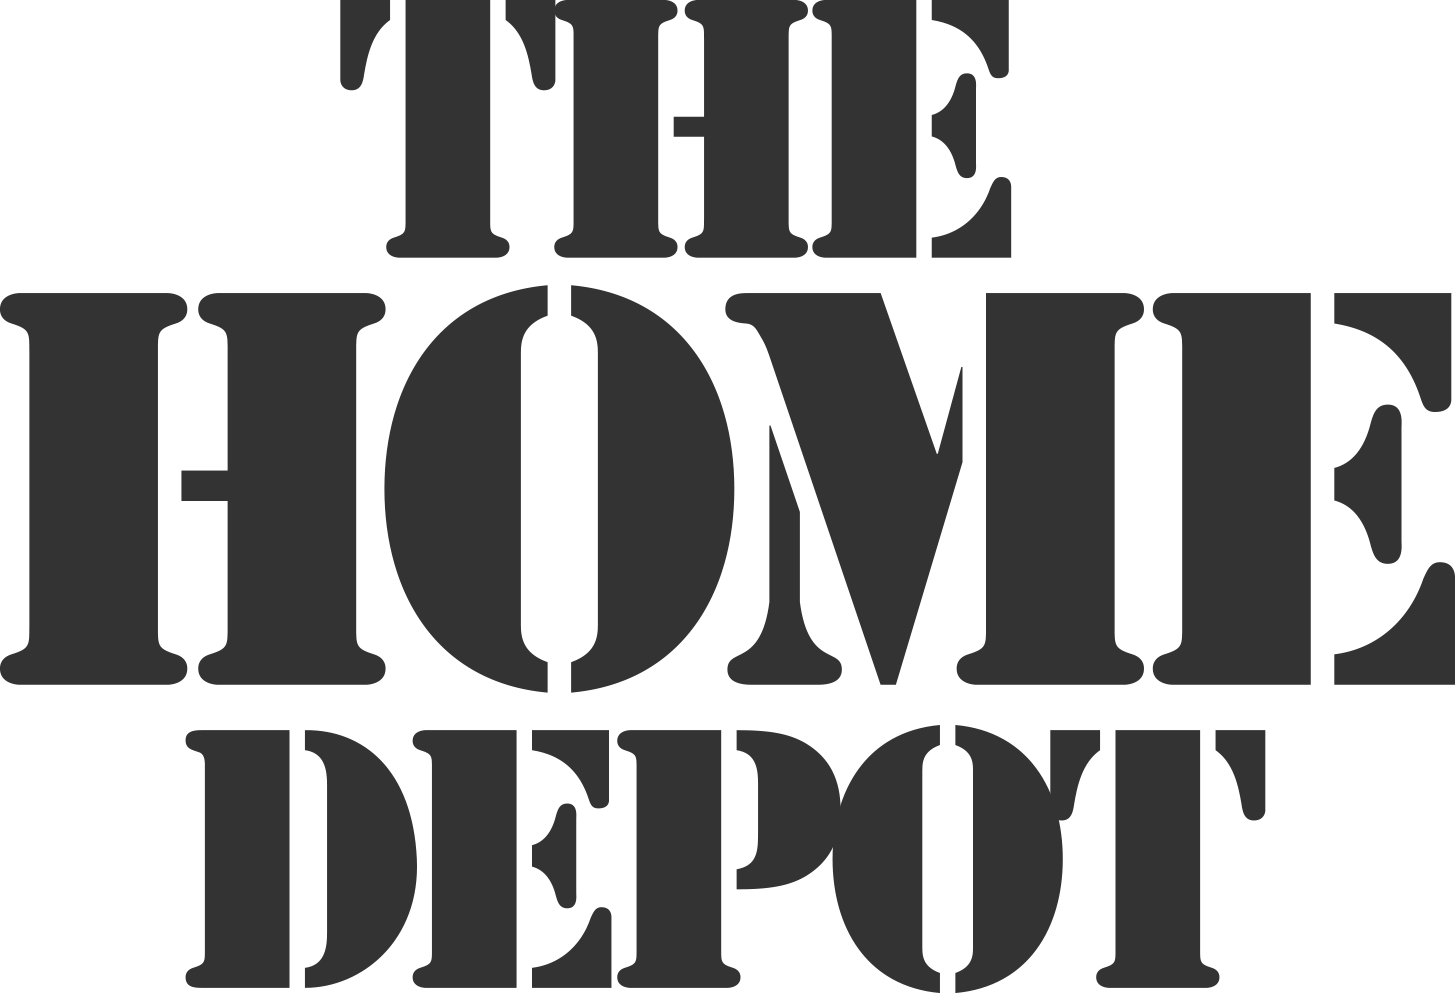 Pinterest Home Logo - Home Depot Logo Clip Art Picture To Pin Logo Image